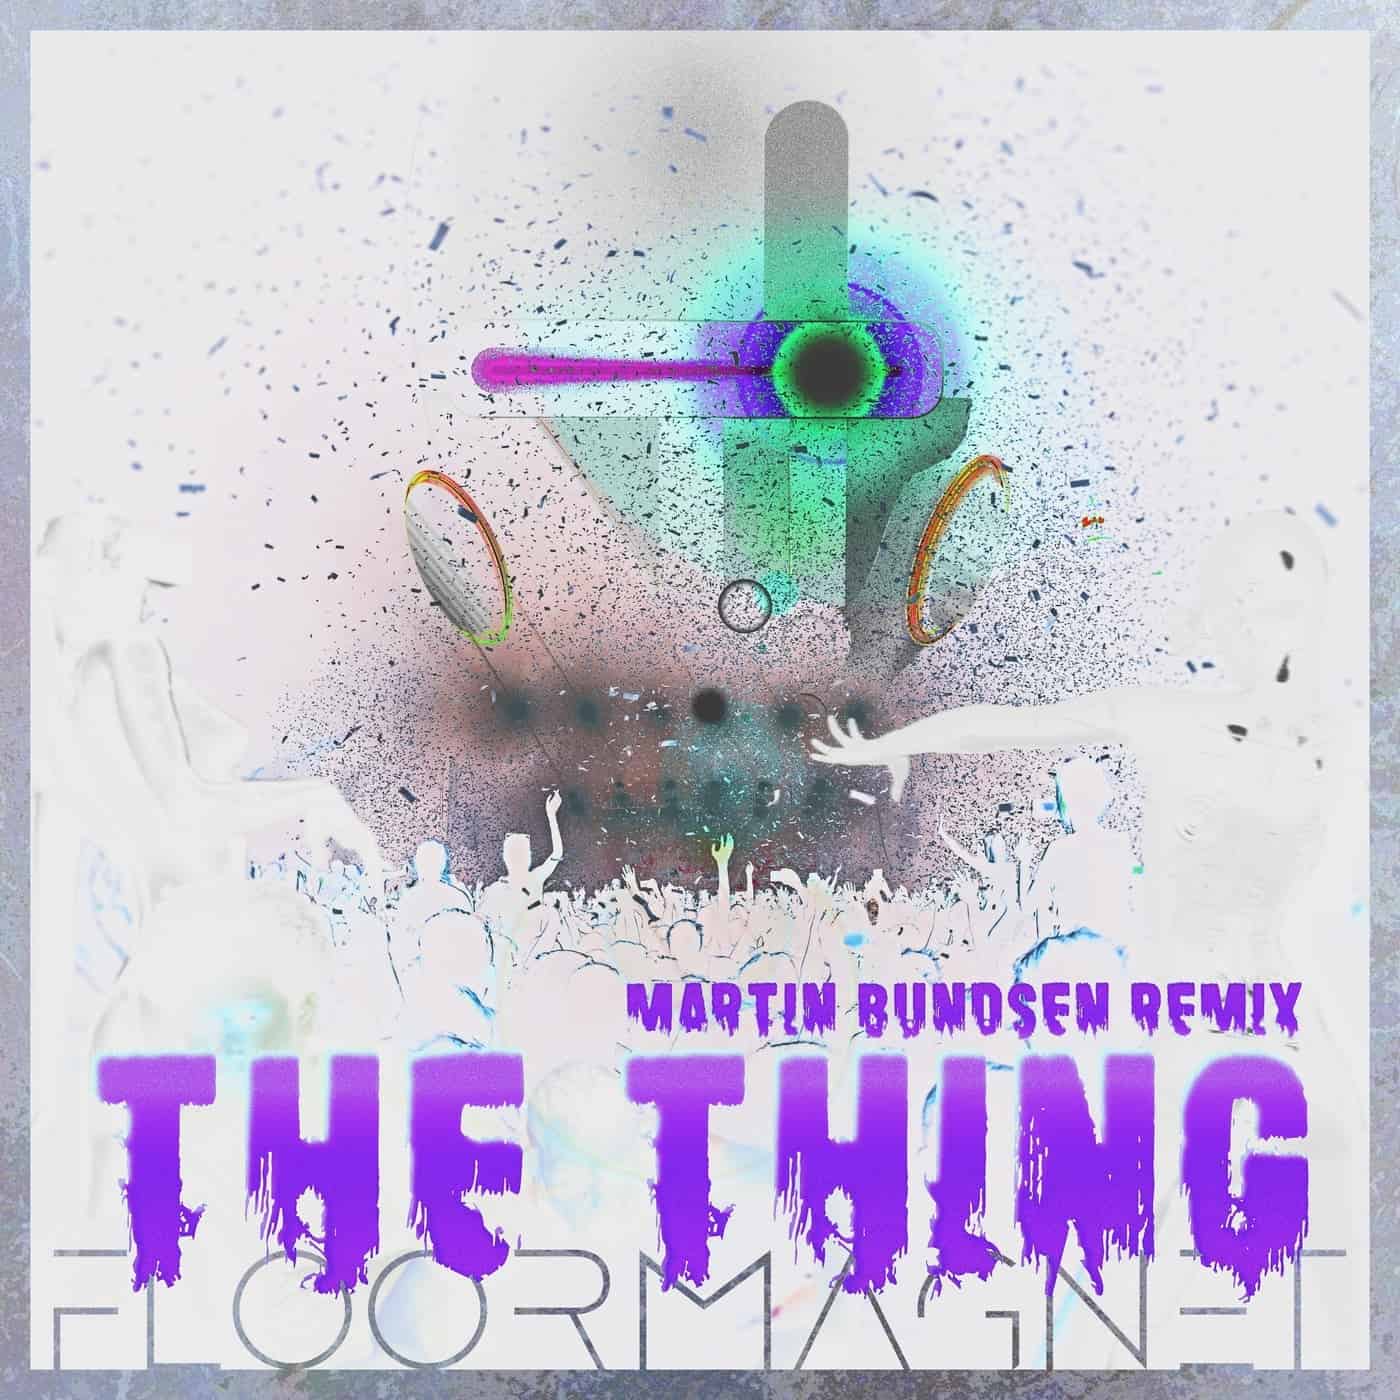 image cover: Floormagnet - The Thing (Martin Bundsen Remix) / 926499